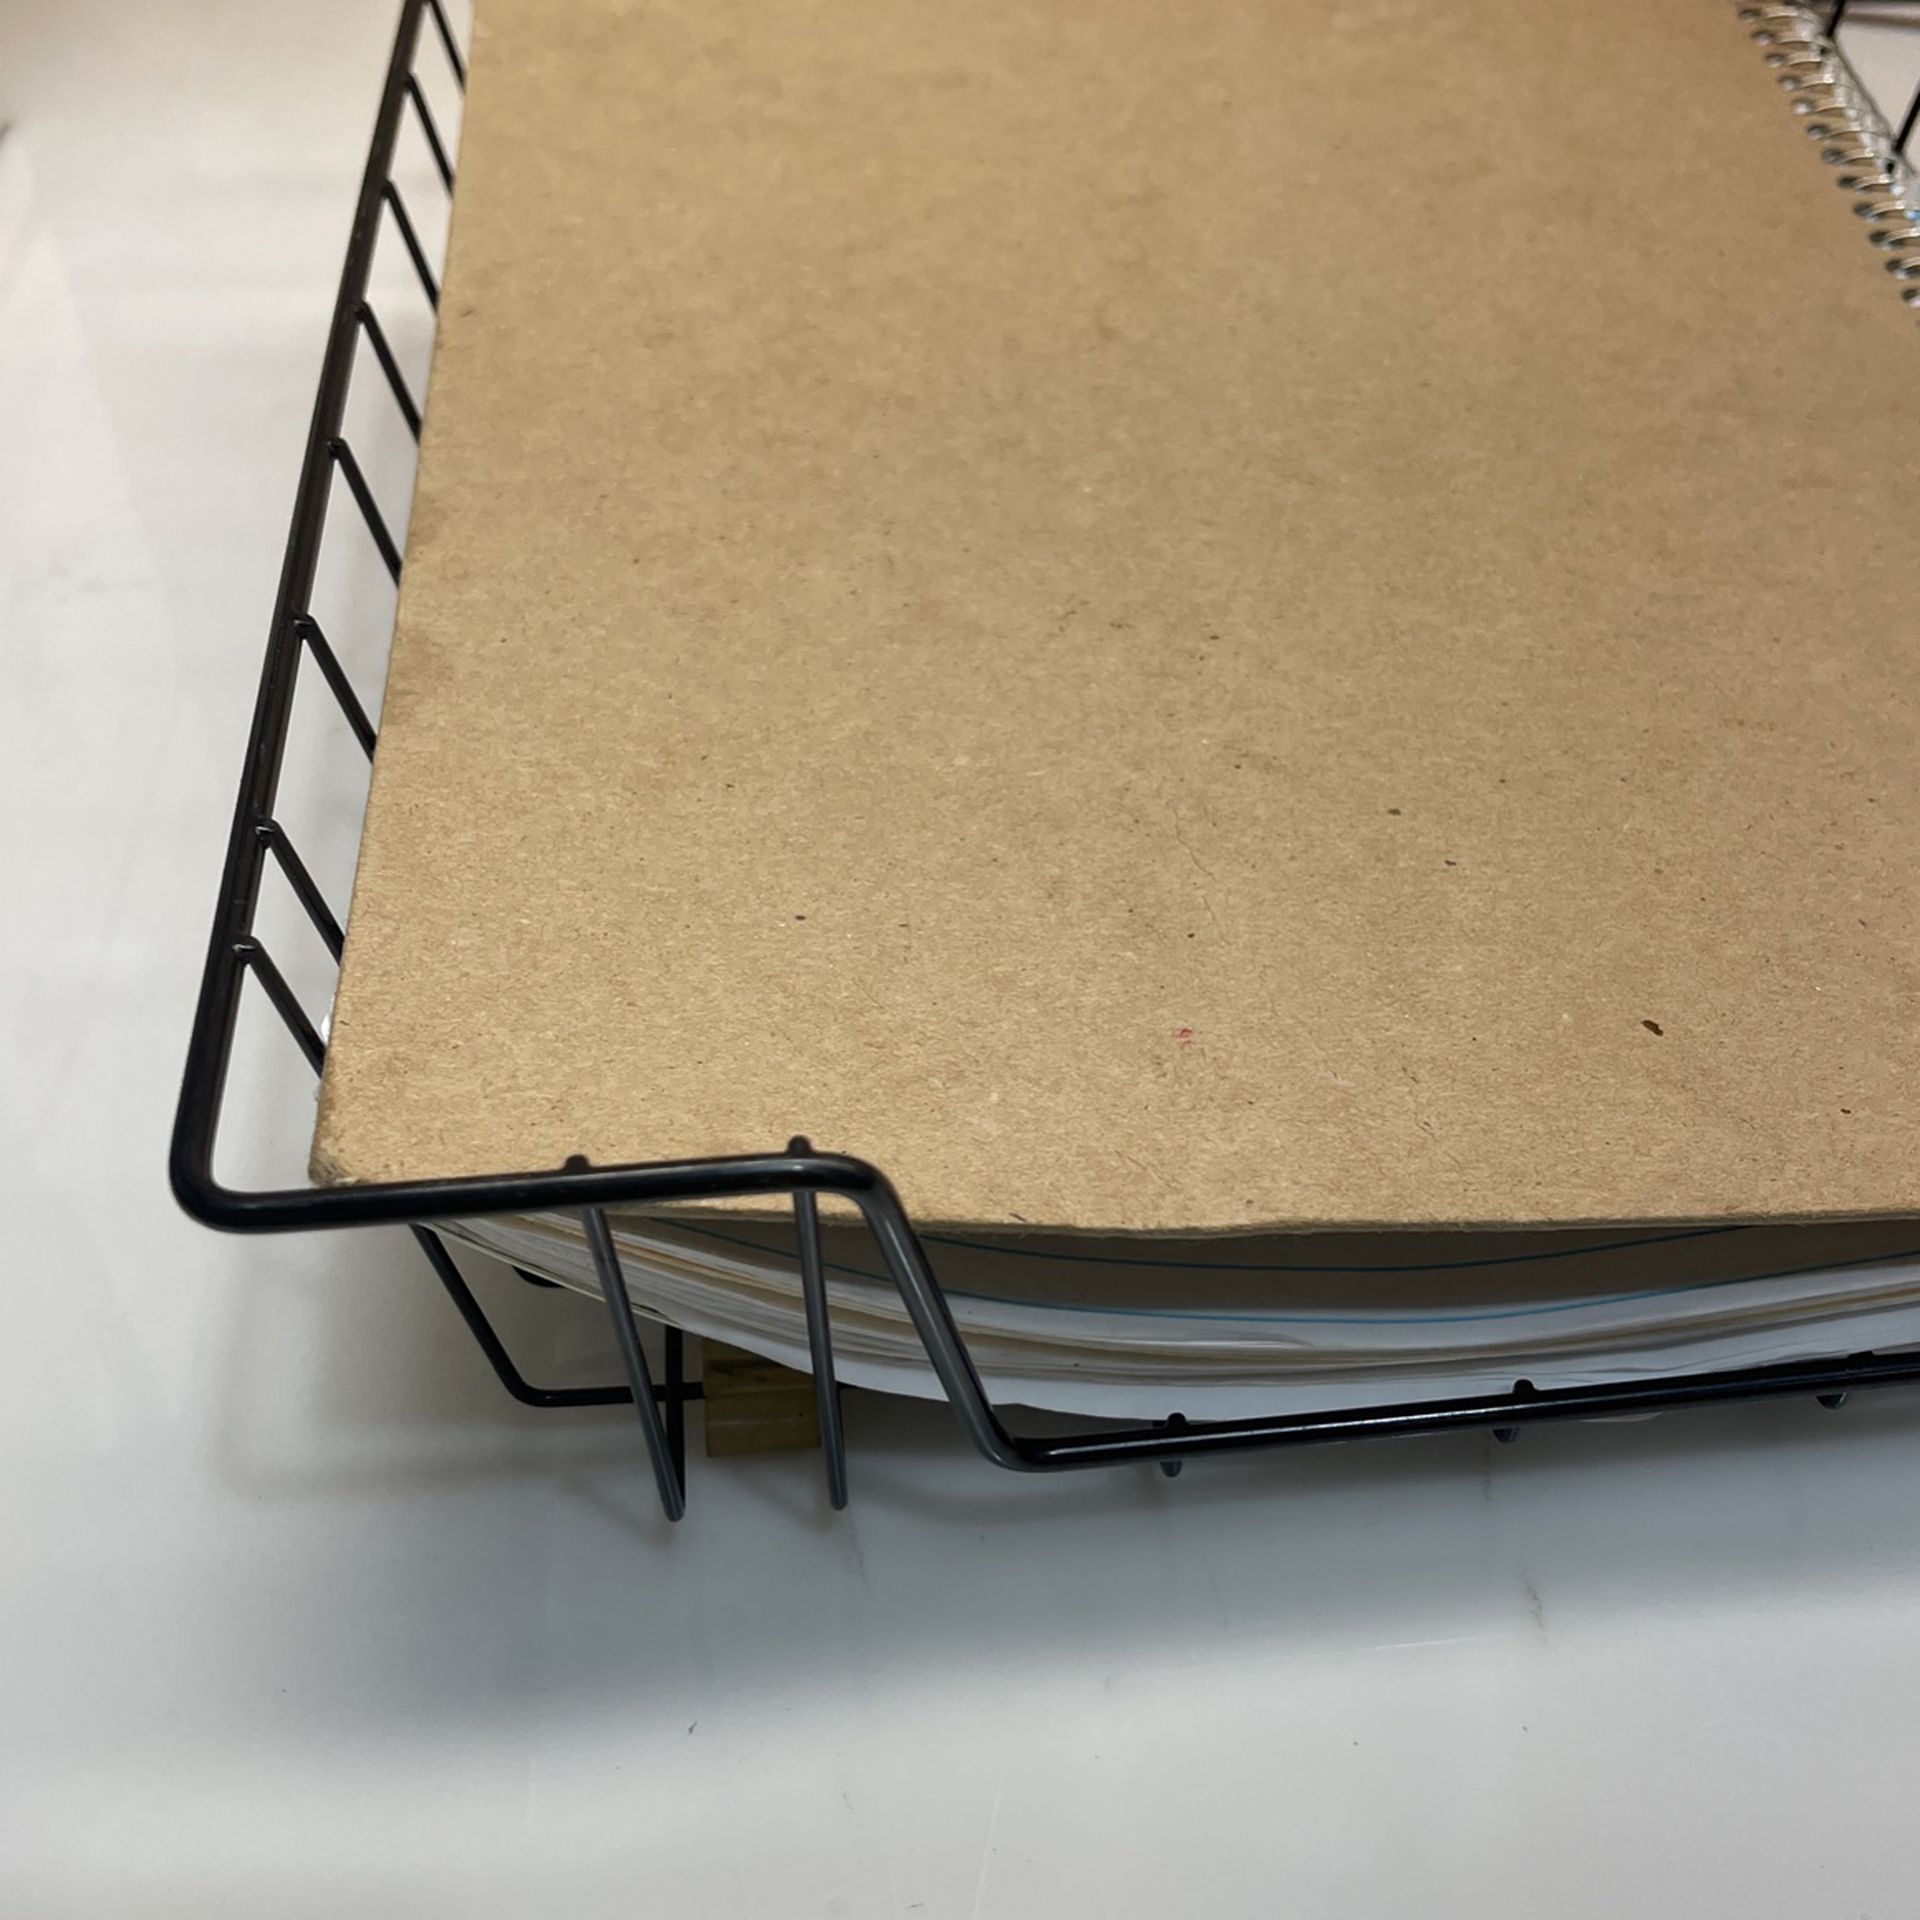 2 Metal Paper Trays 